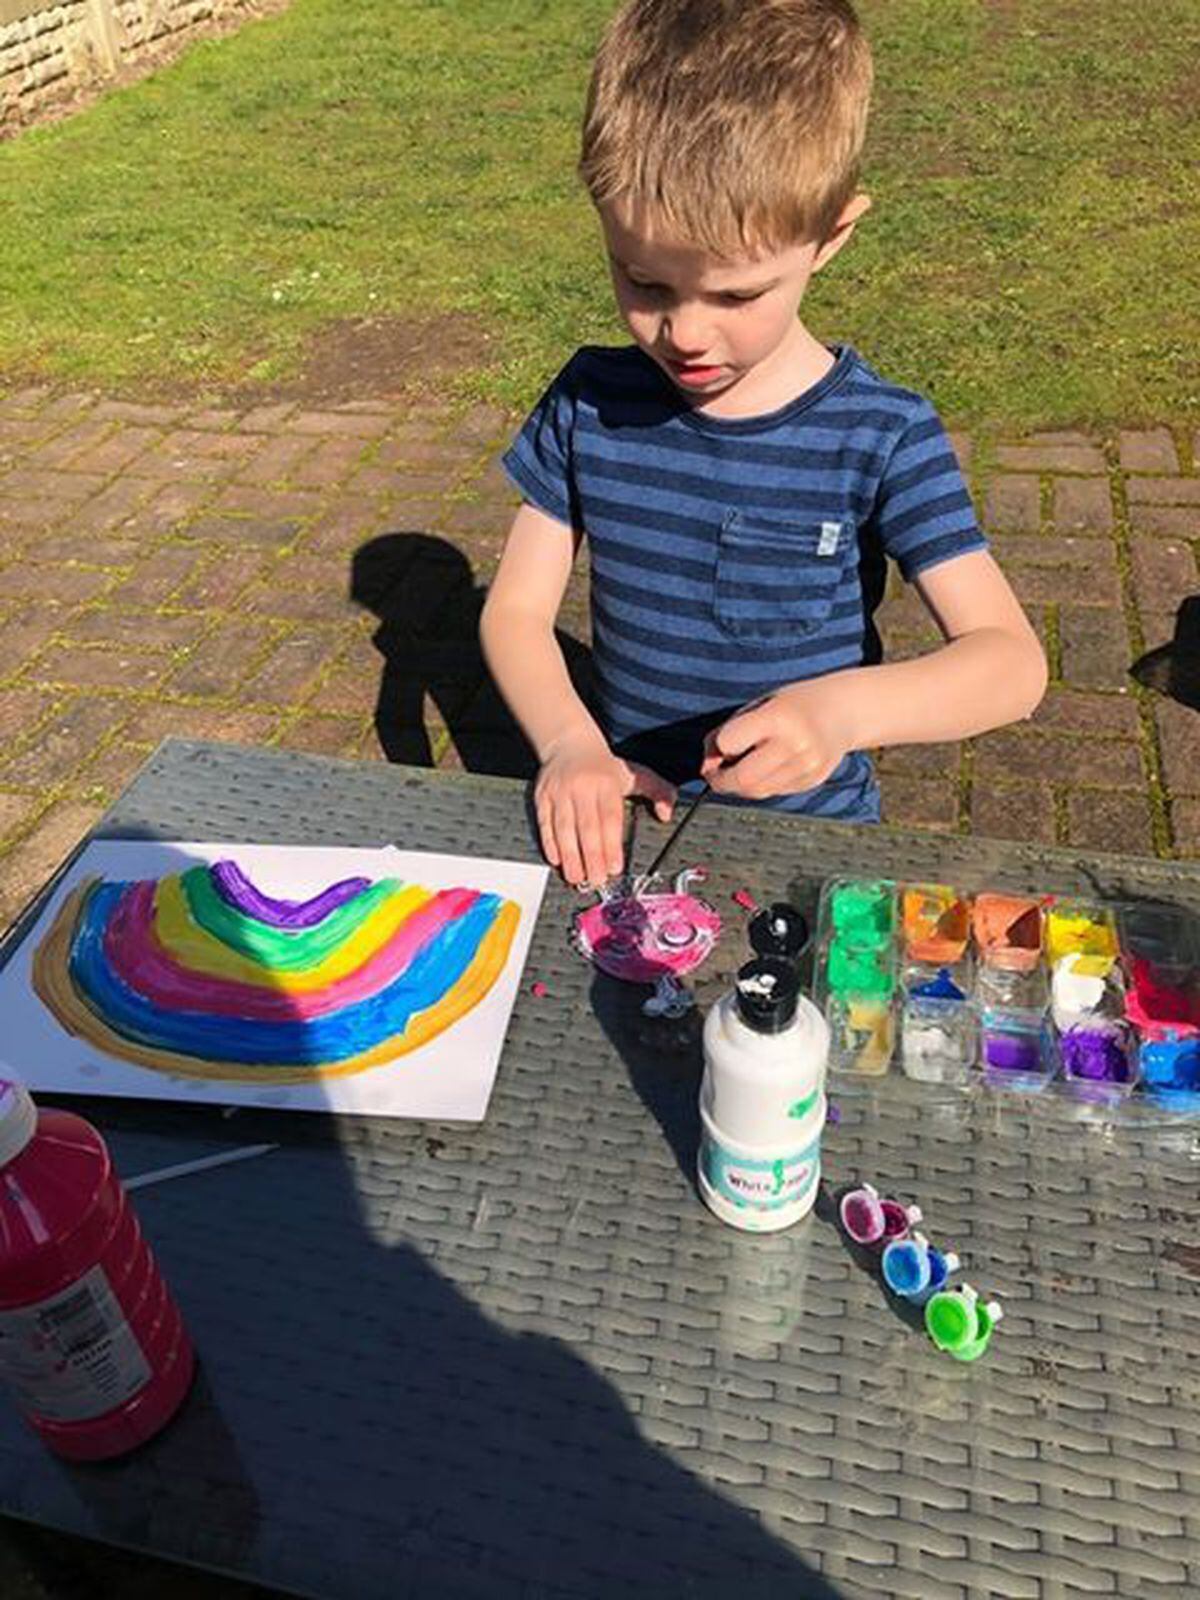 William Tomlinson, 5, from Tettenhall, painting his rainbow